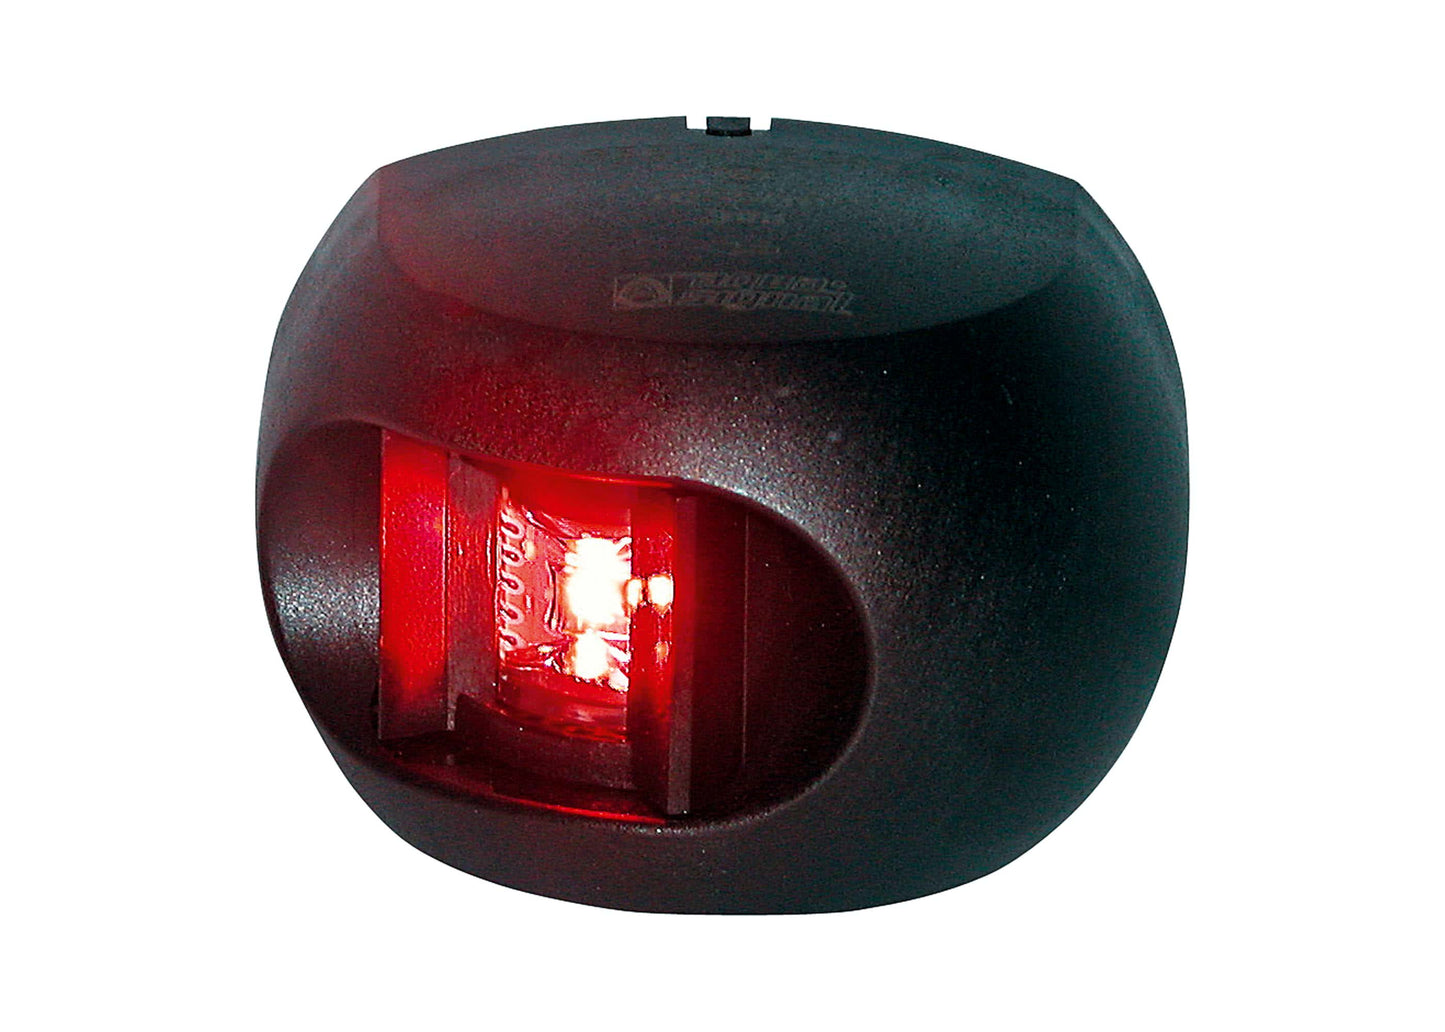 Series 34 LED portside navigation light